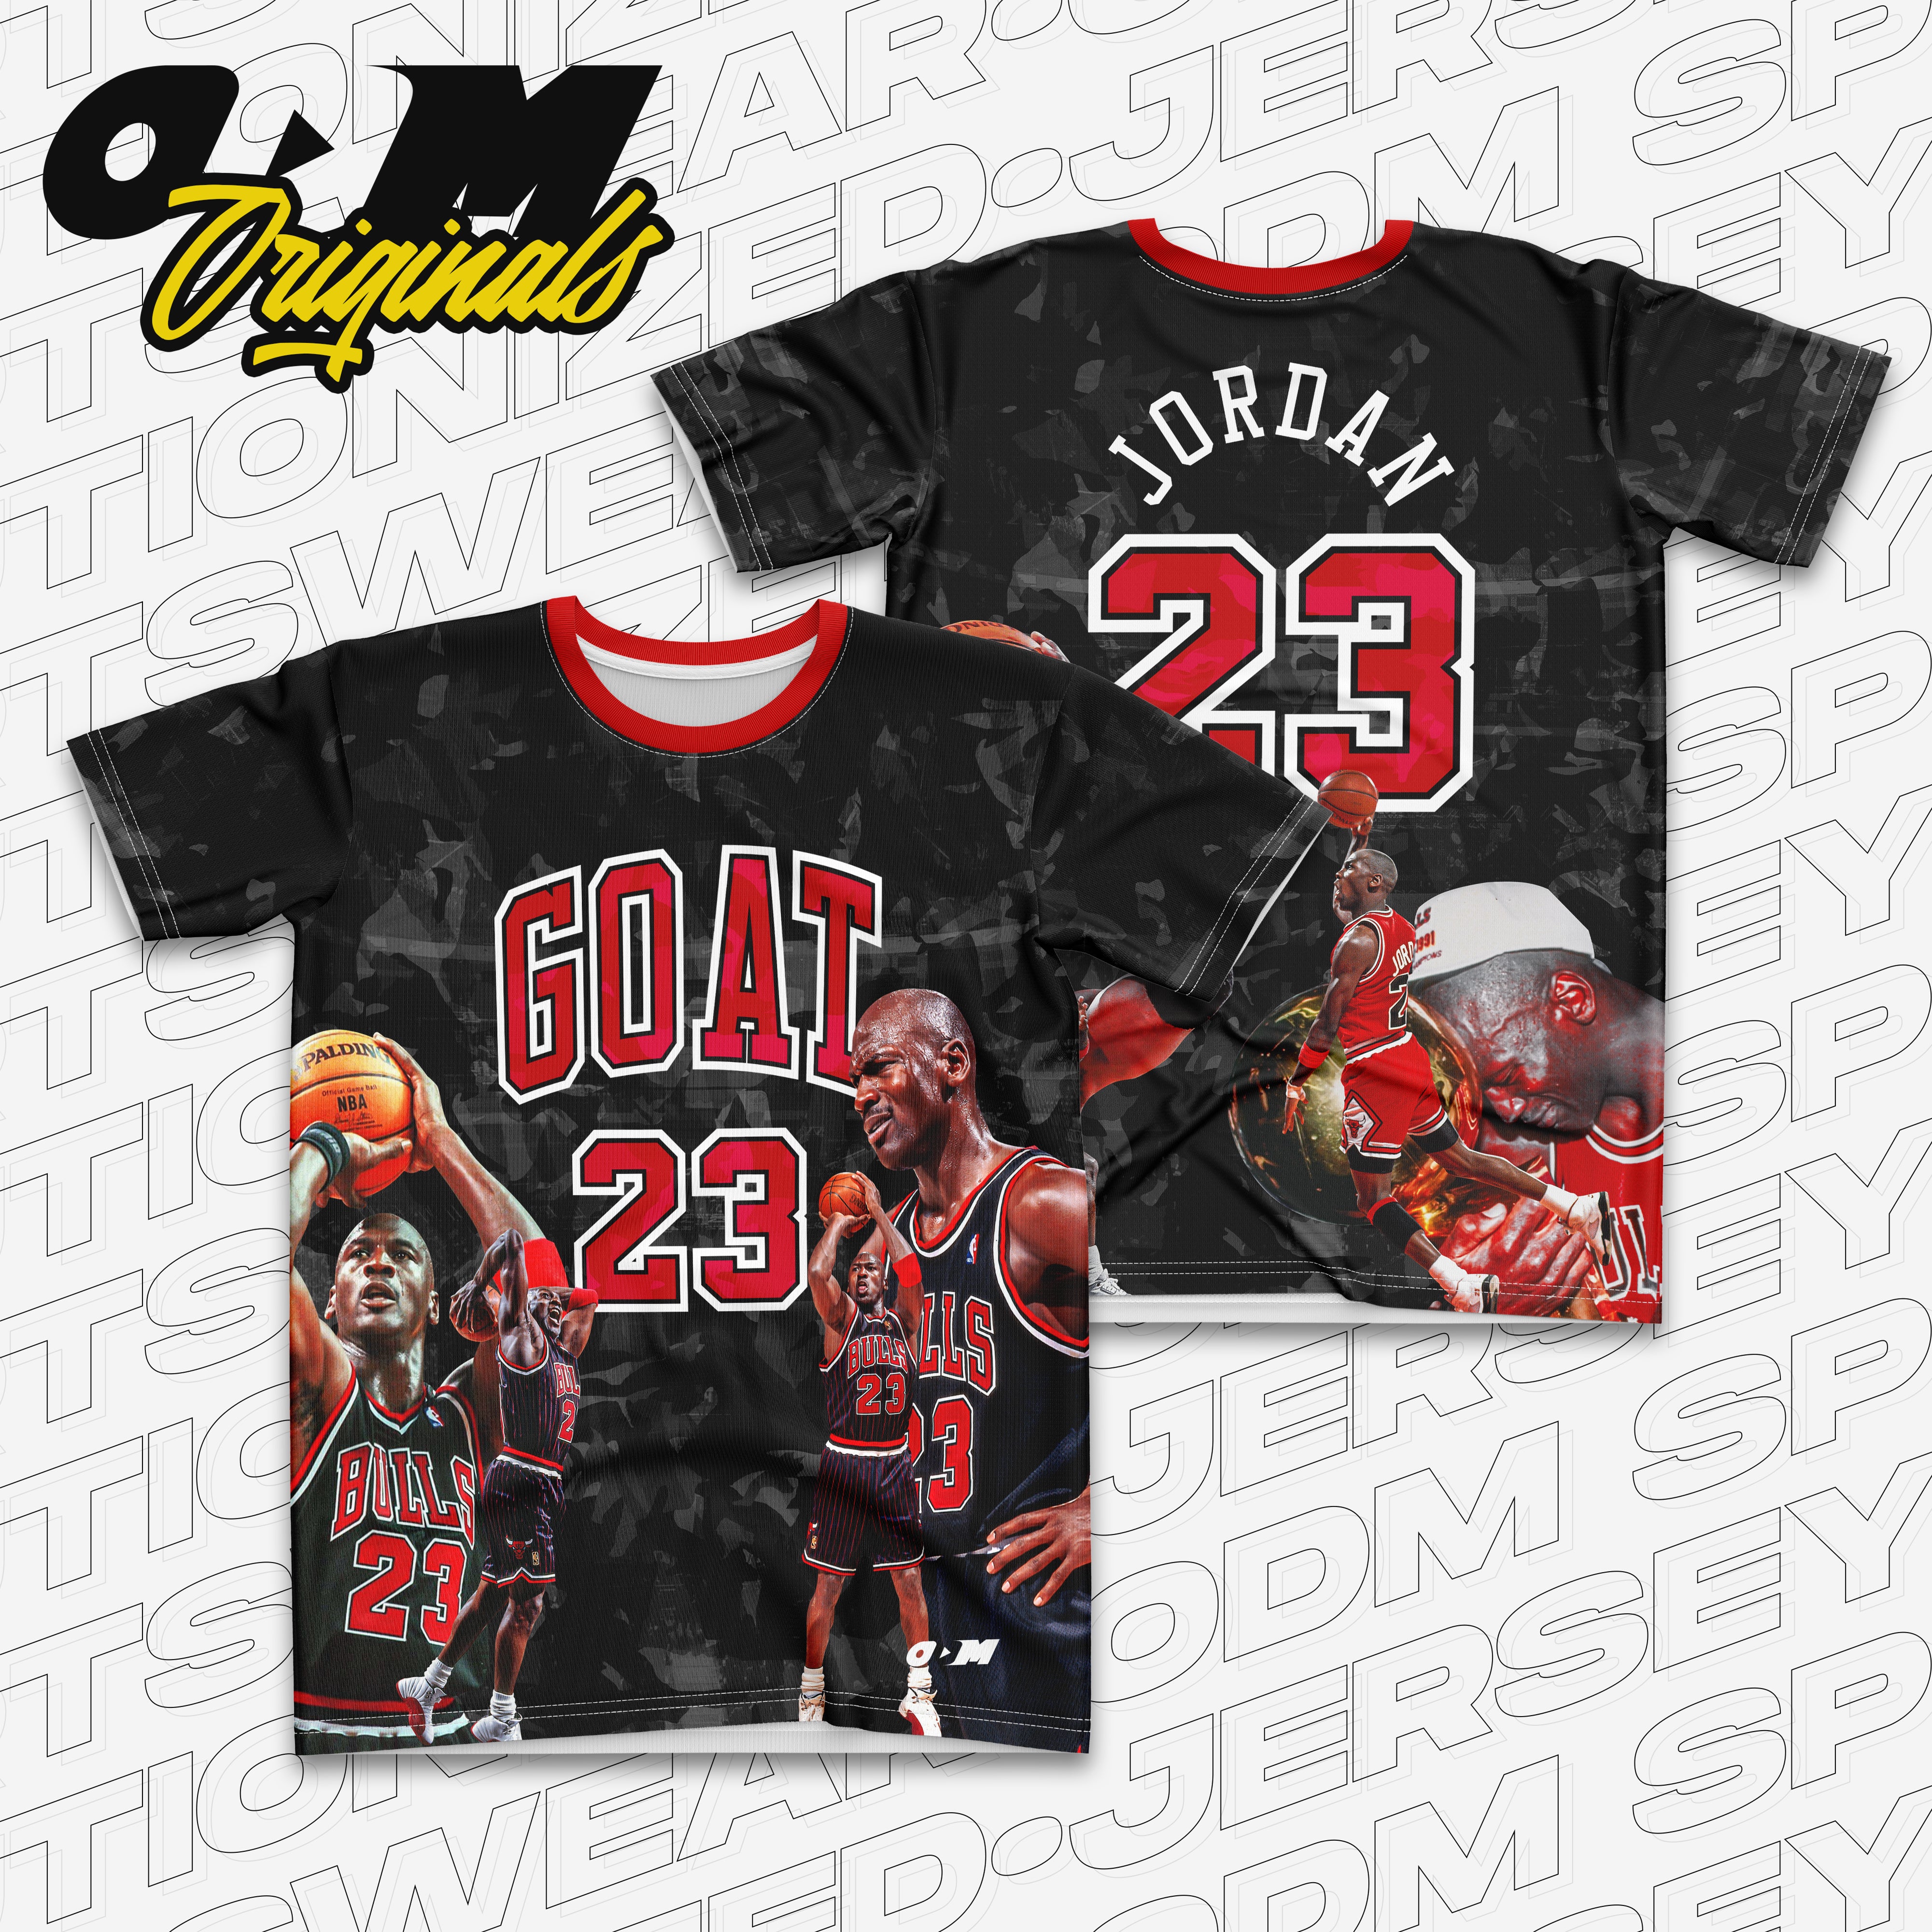 MJ GOAT x ODM shirt